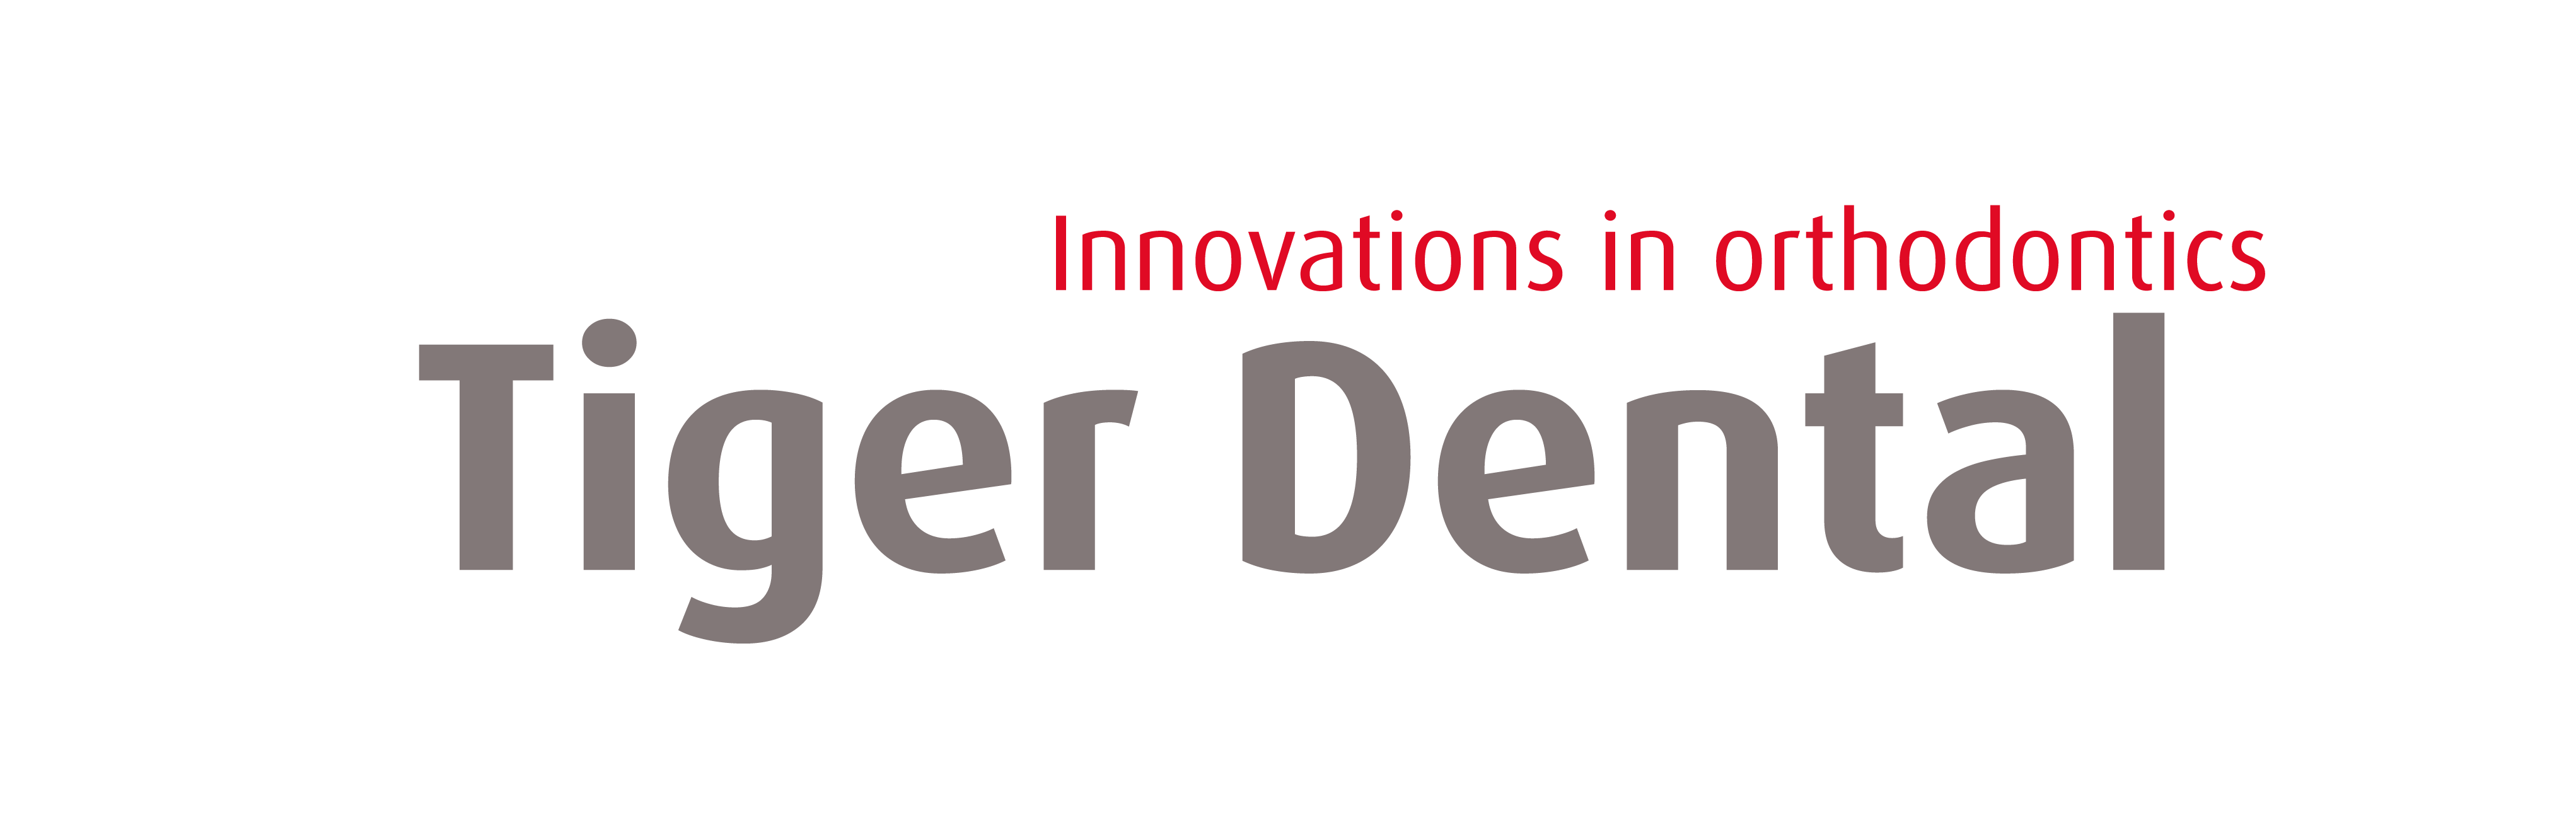 Tiger Dental GmbH